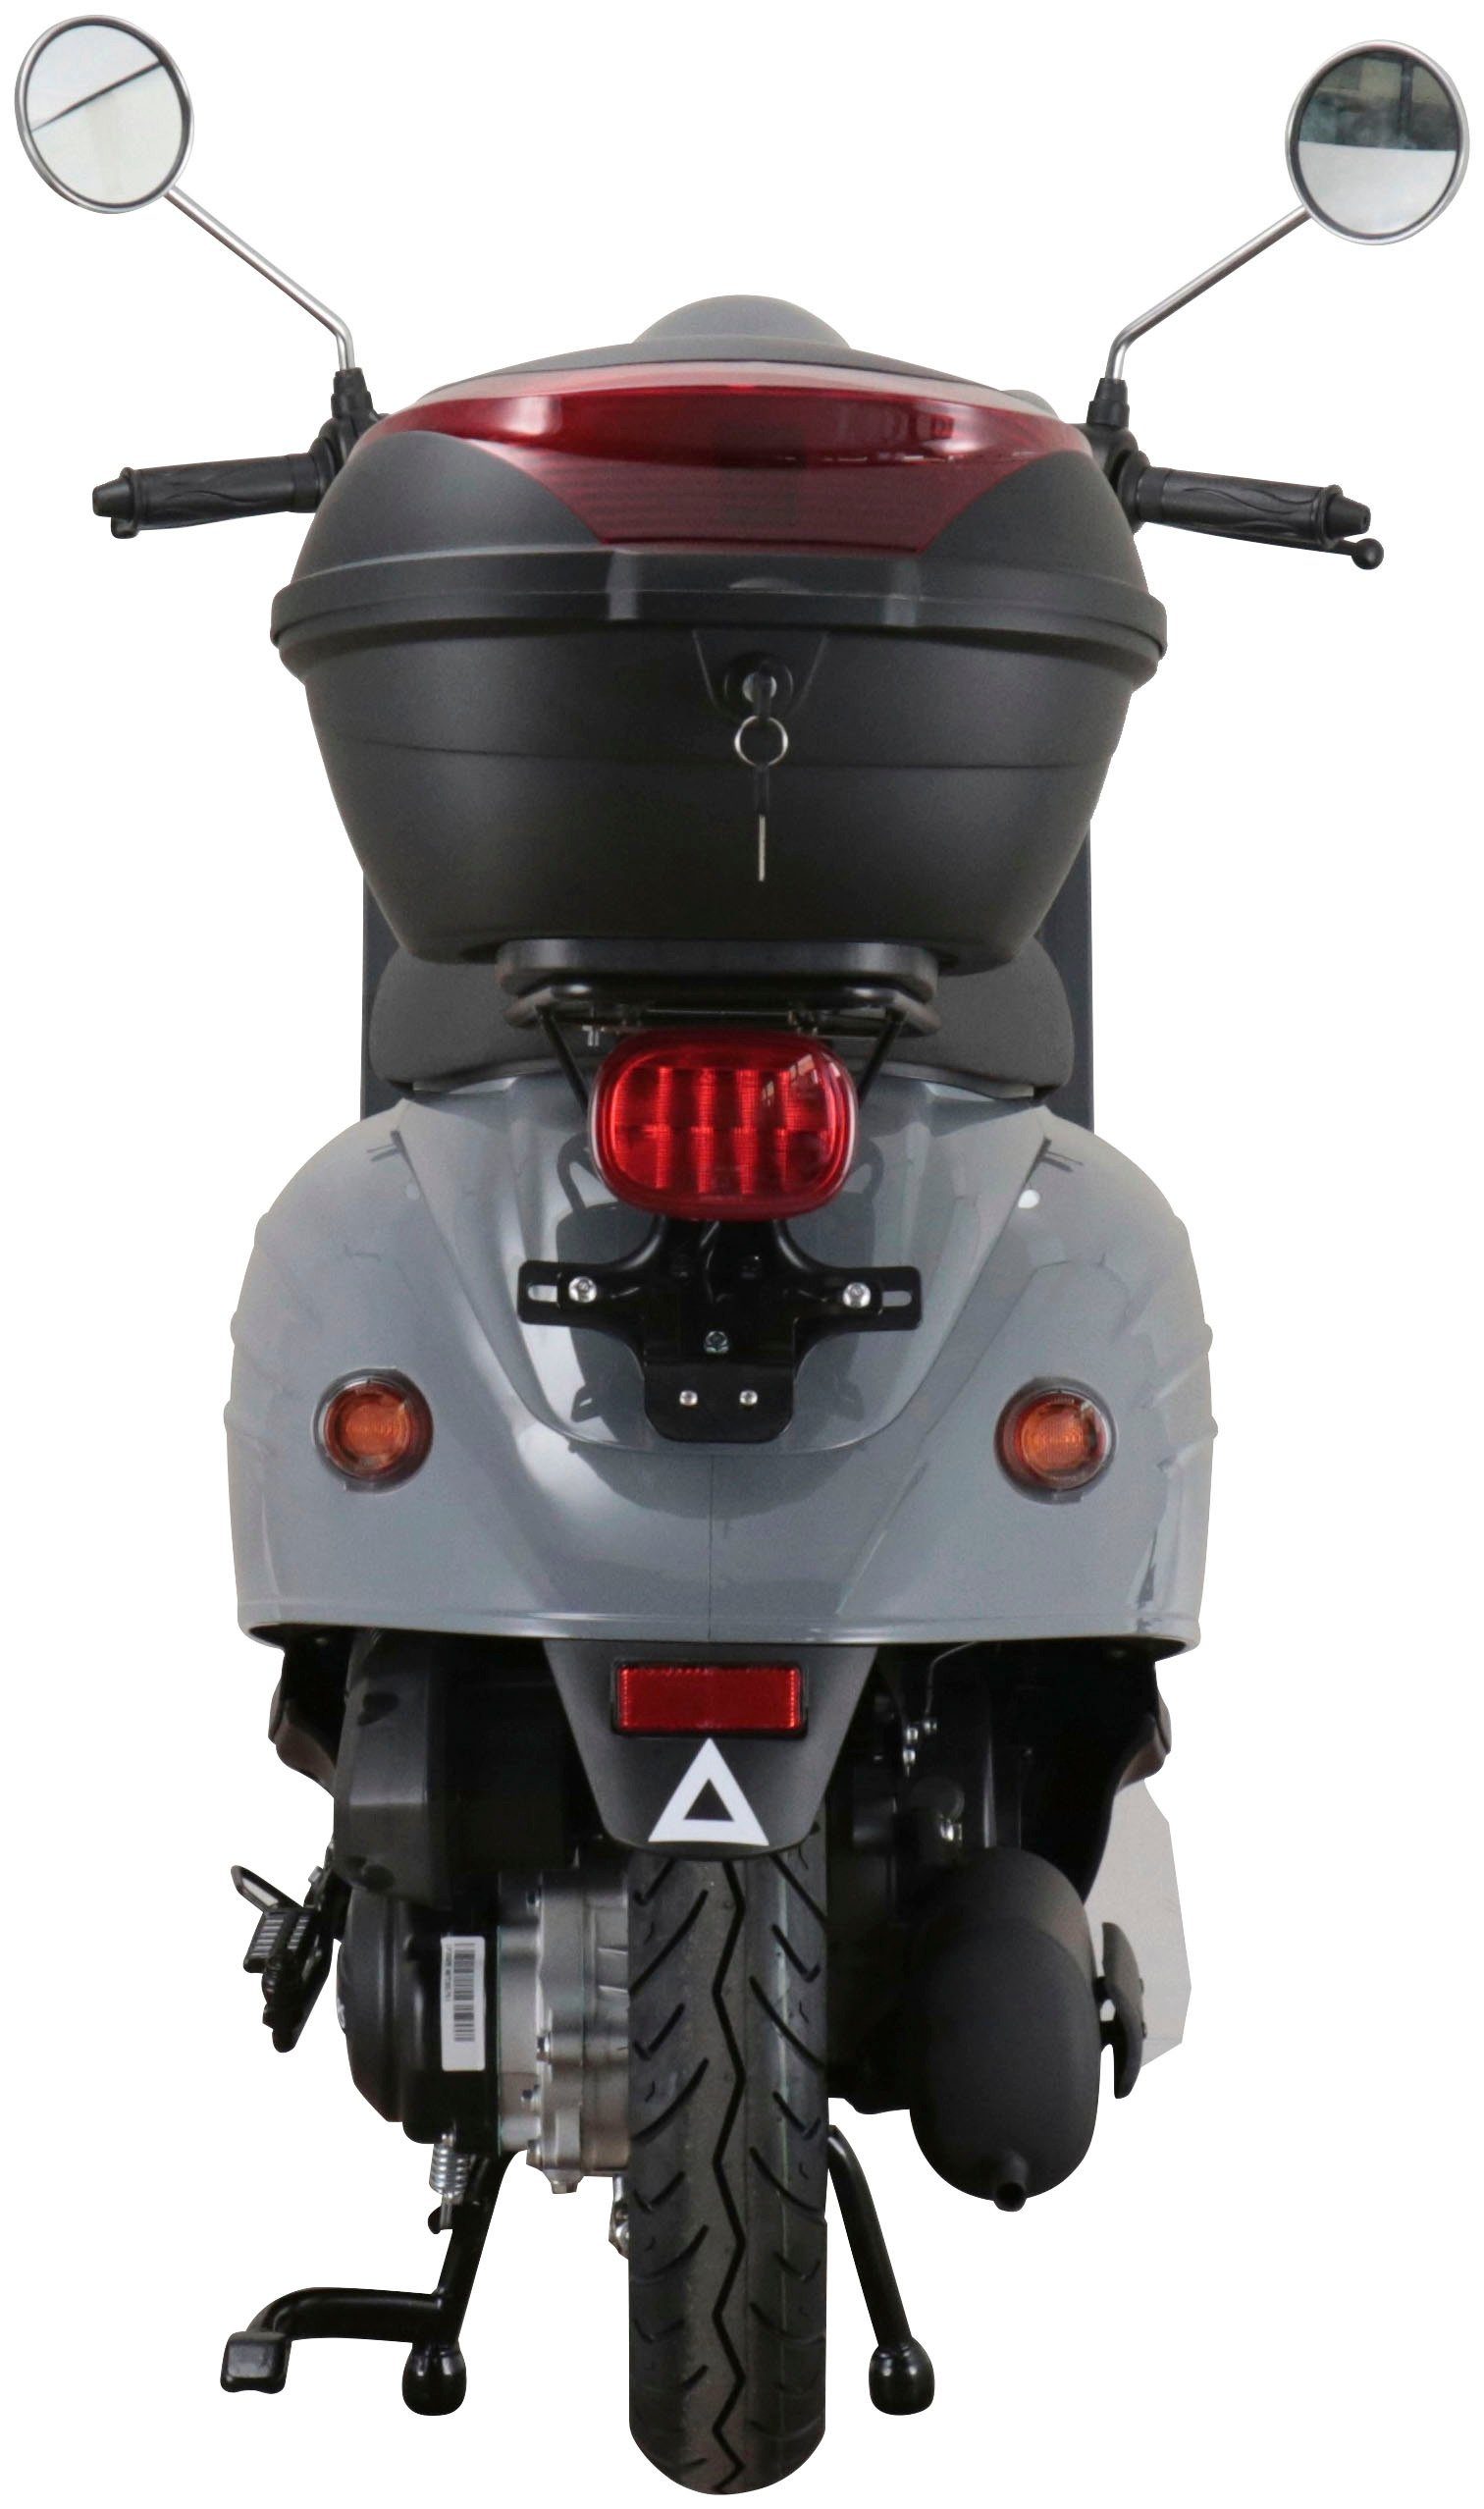 Motors Motorroller mattgrau 50 45 5, Alpha Adria, Topcase) (Set, mit ccm, km/h, Euro